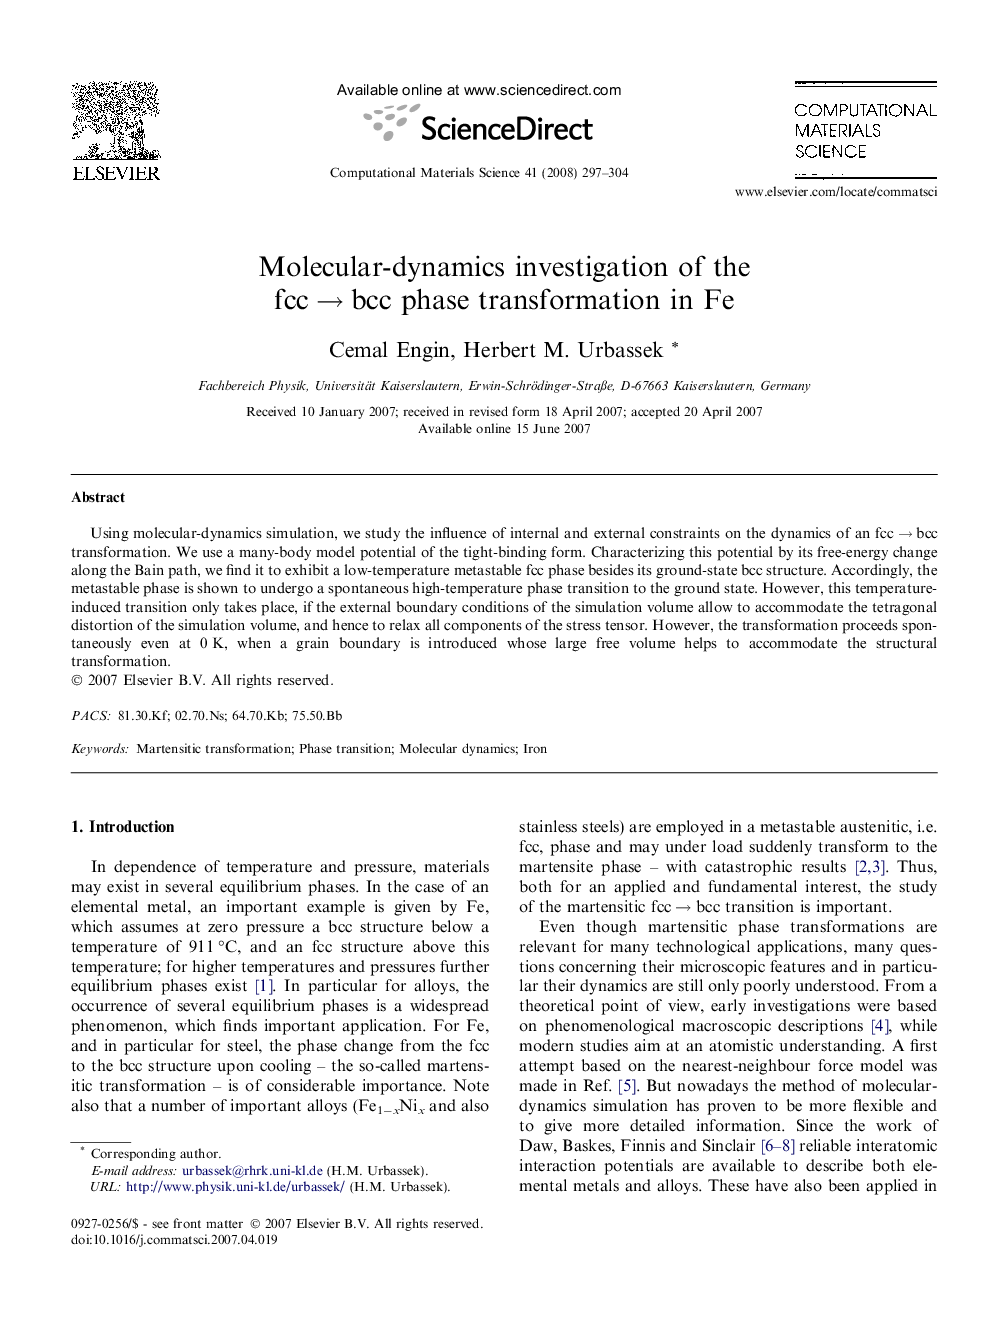 Molecular-dynamics investigation of the fccÂ âÂ bcc phase transformation in Fe